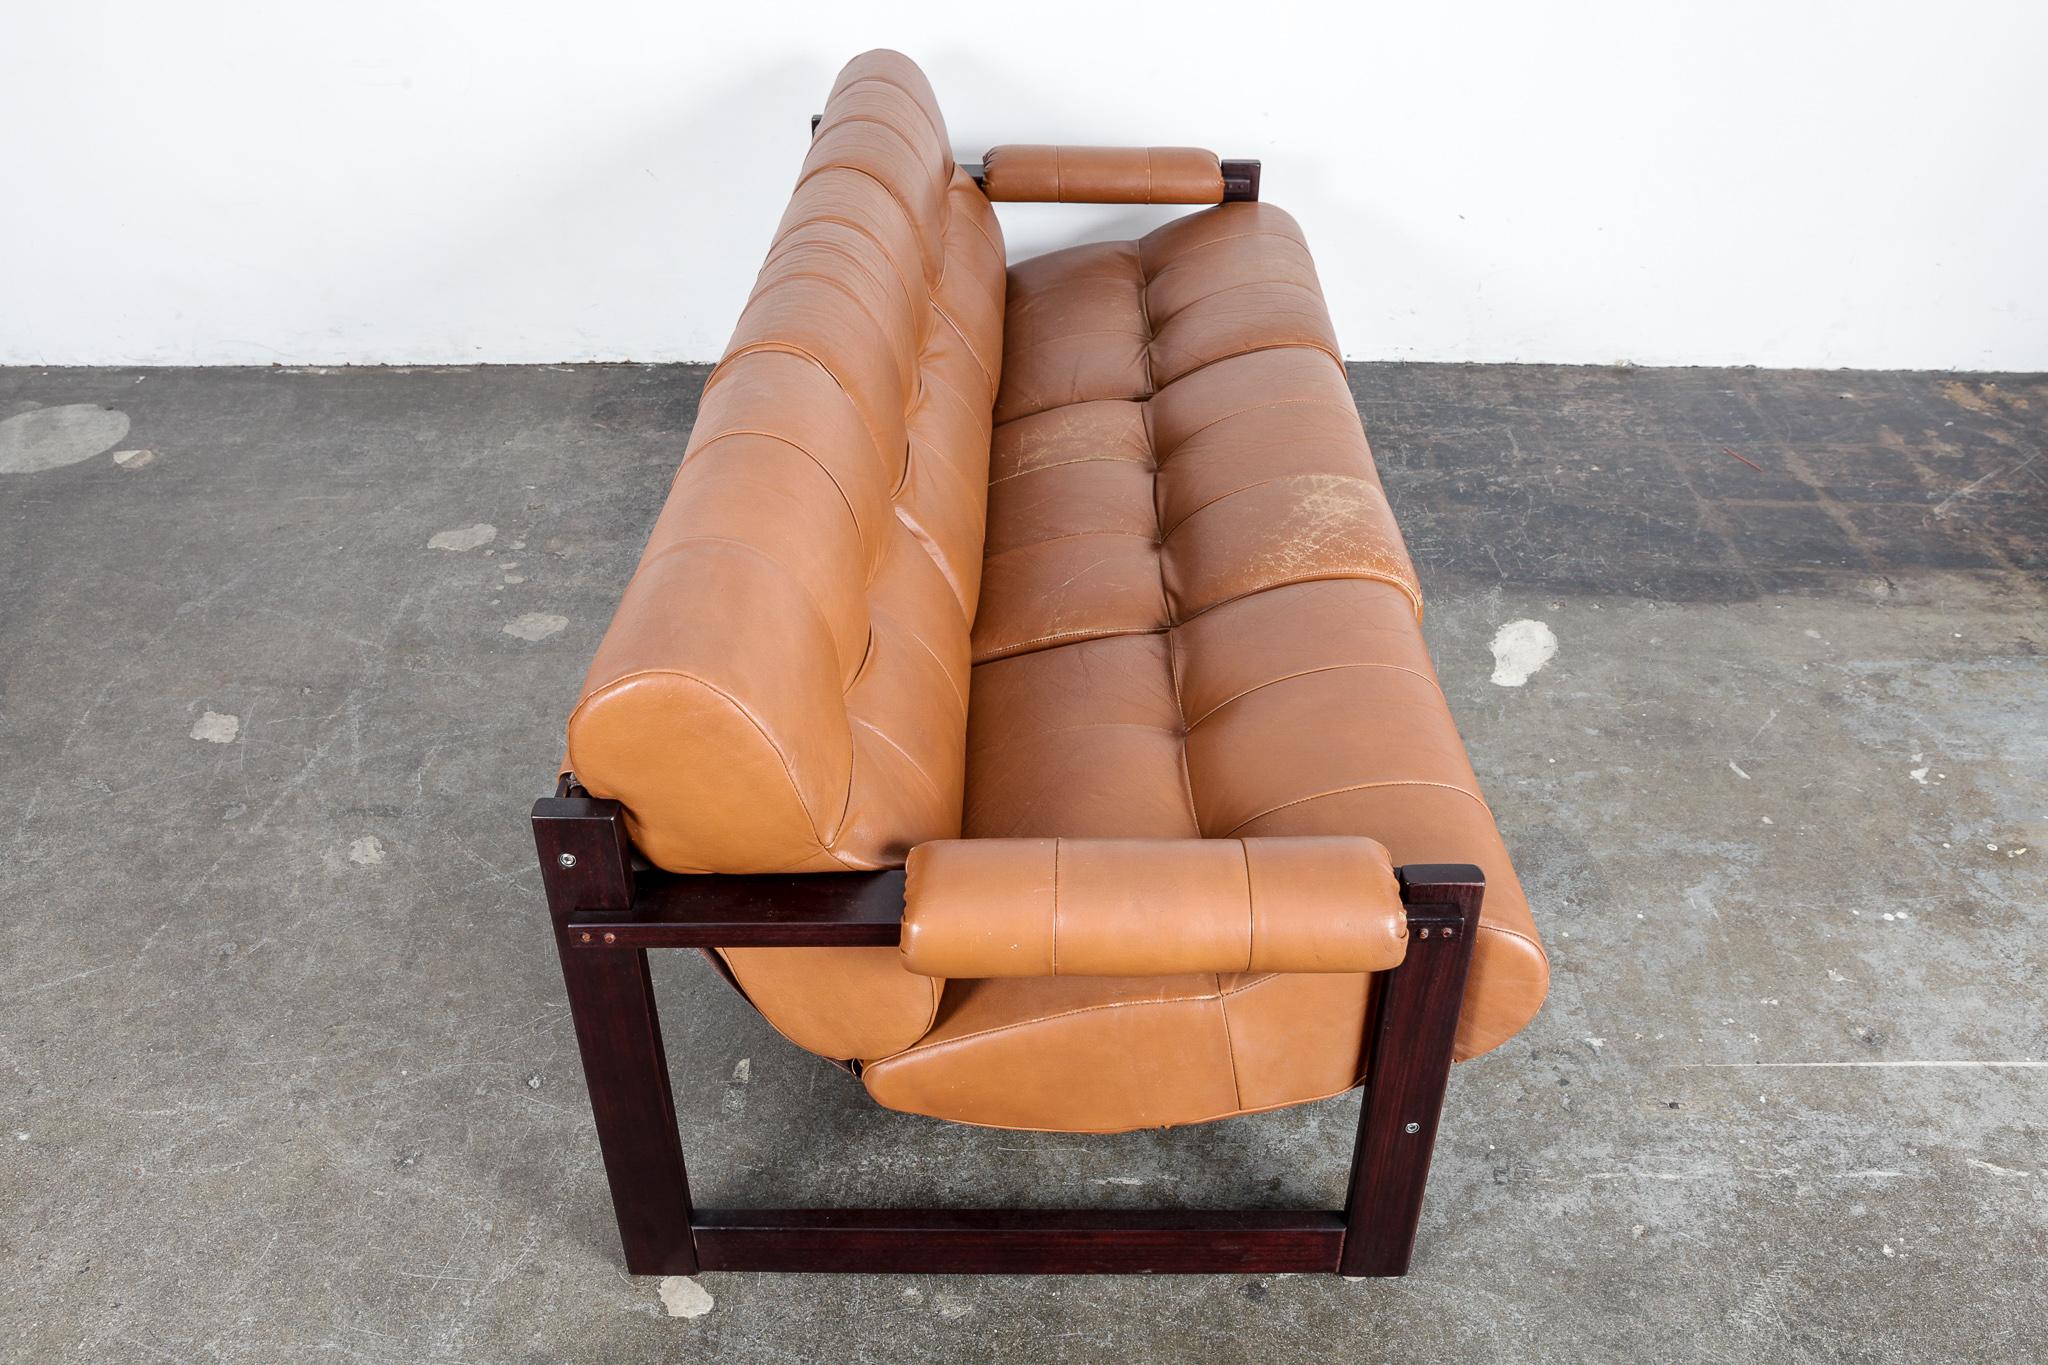 Brazilian Percival Lafer 3-Seat MP-167 Sofa in Original Burnt Orange Leather, Brazil